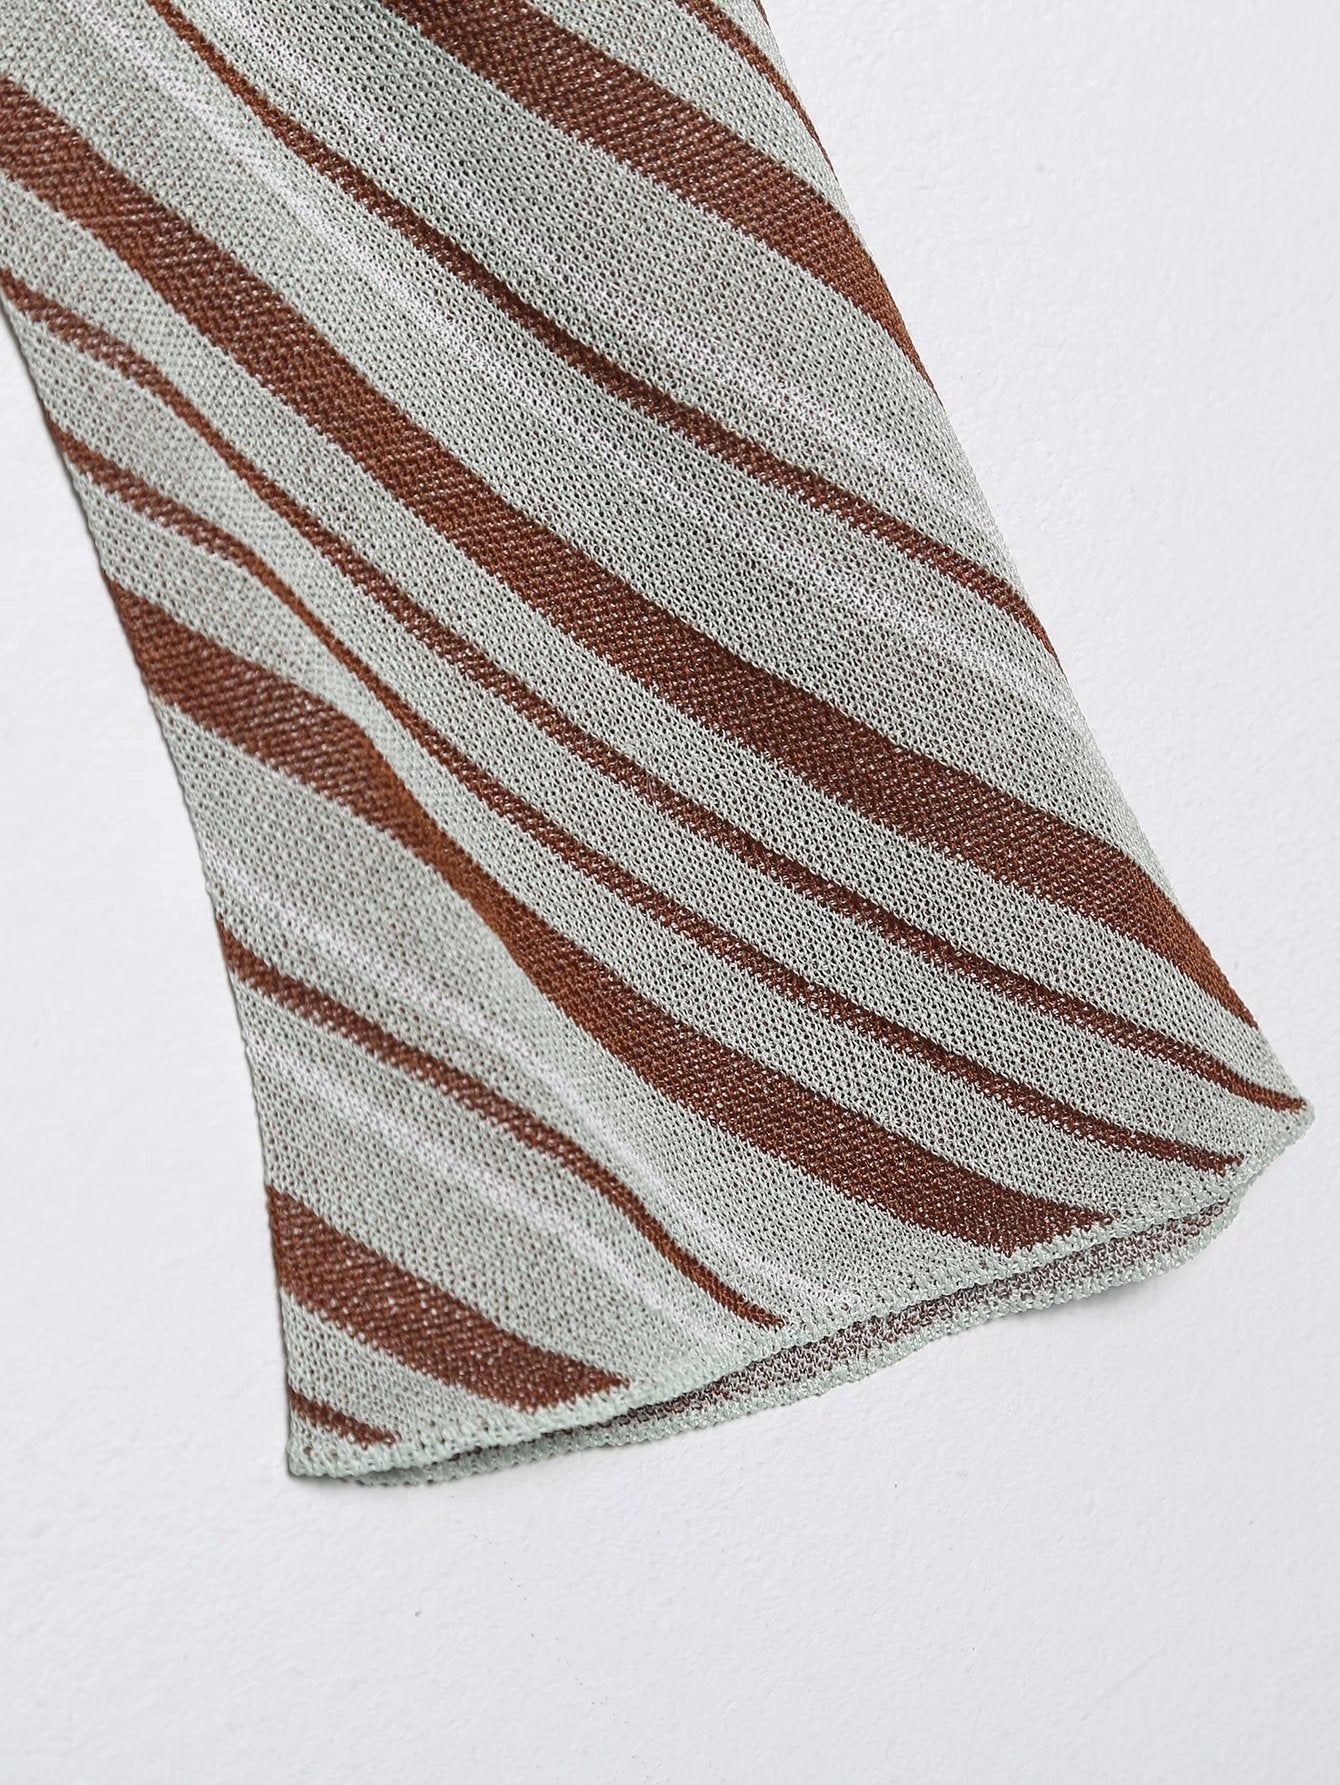 Longa Striped Knit Set - Kelly Obi New York